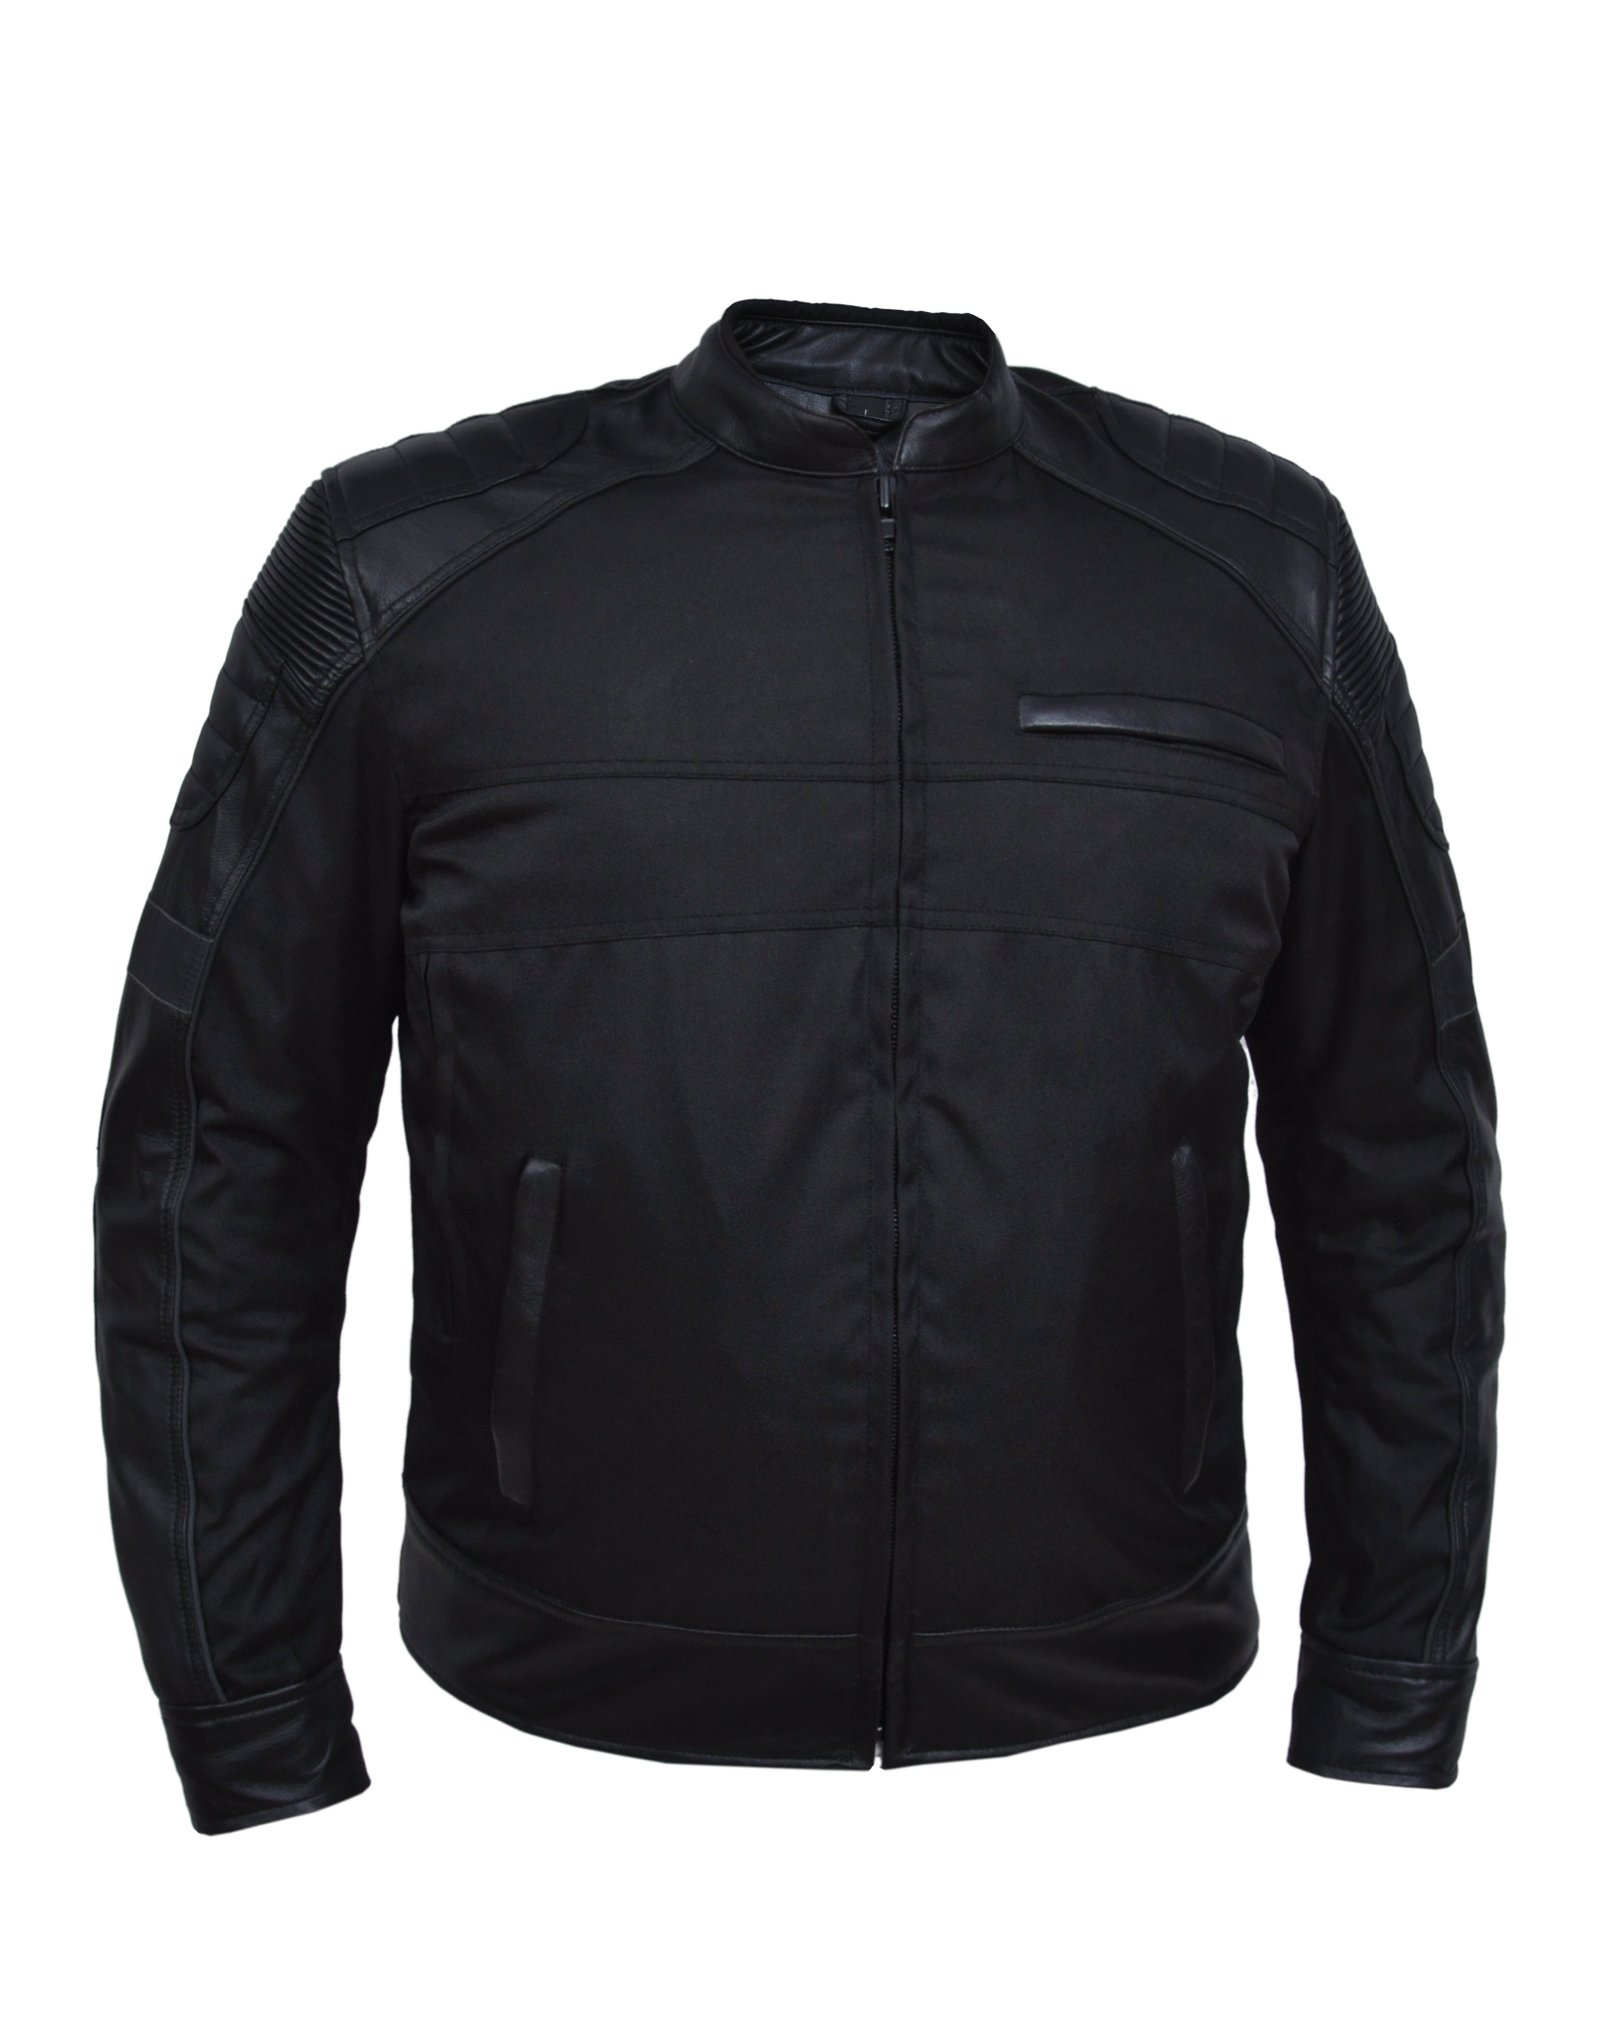 Nylon and Leather Textile Jacket - Men's - Motorcycle - 3610-00-UN